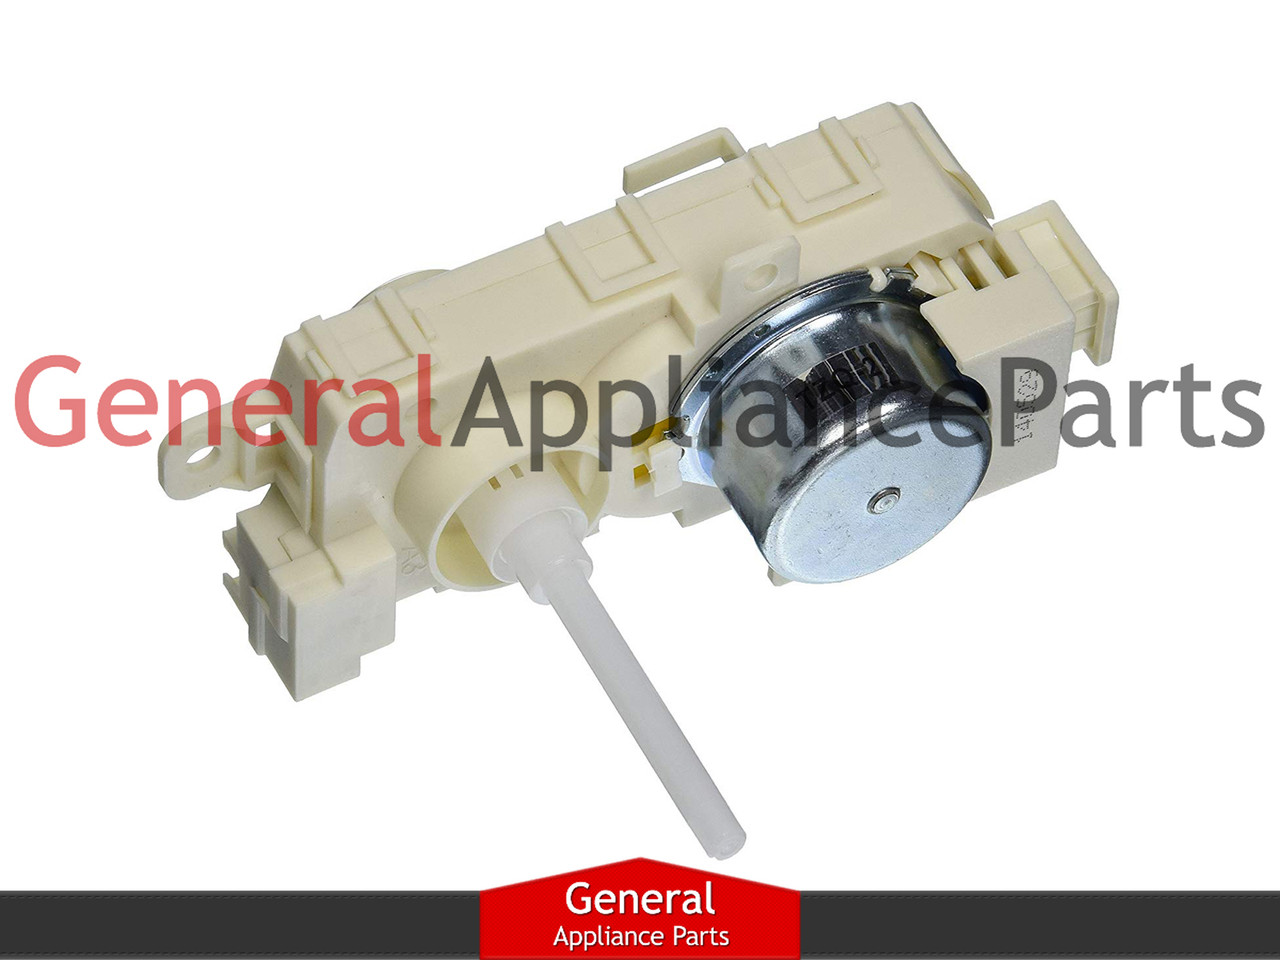 NEW ORIGINAL Whirlpool Dishwasher Diverter Motor W10537869 or W10849439 & More 